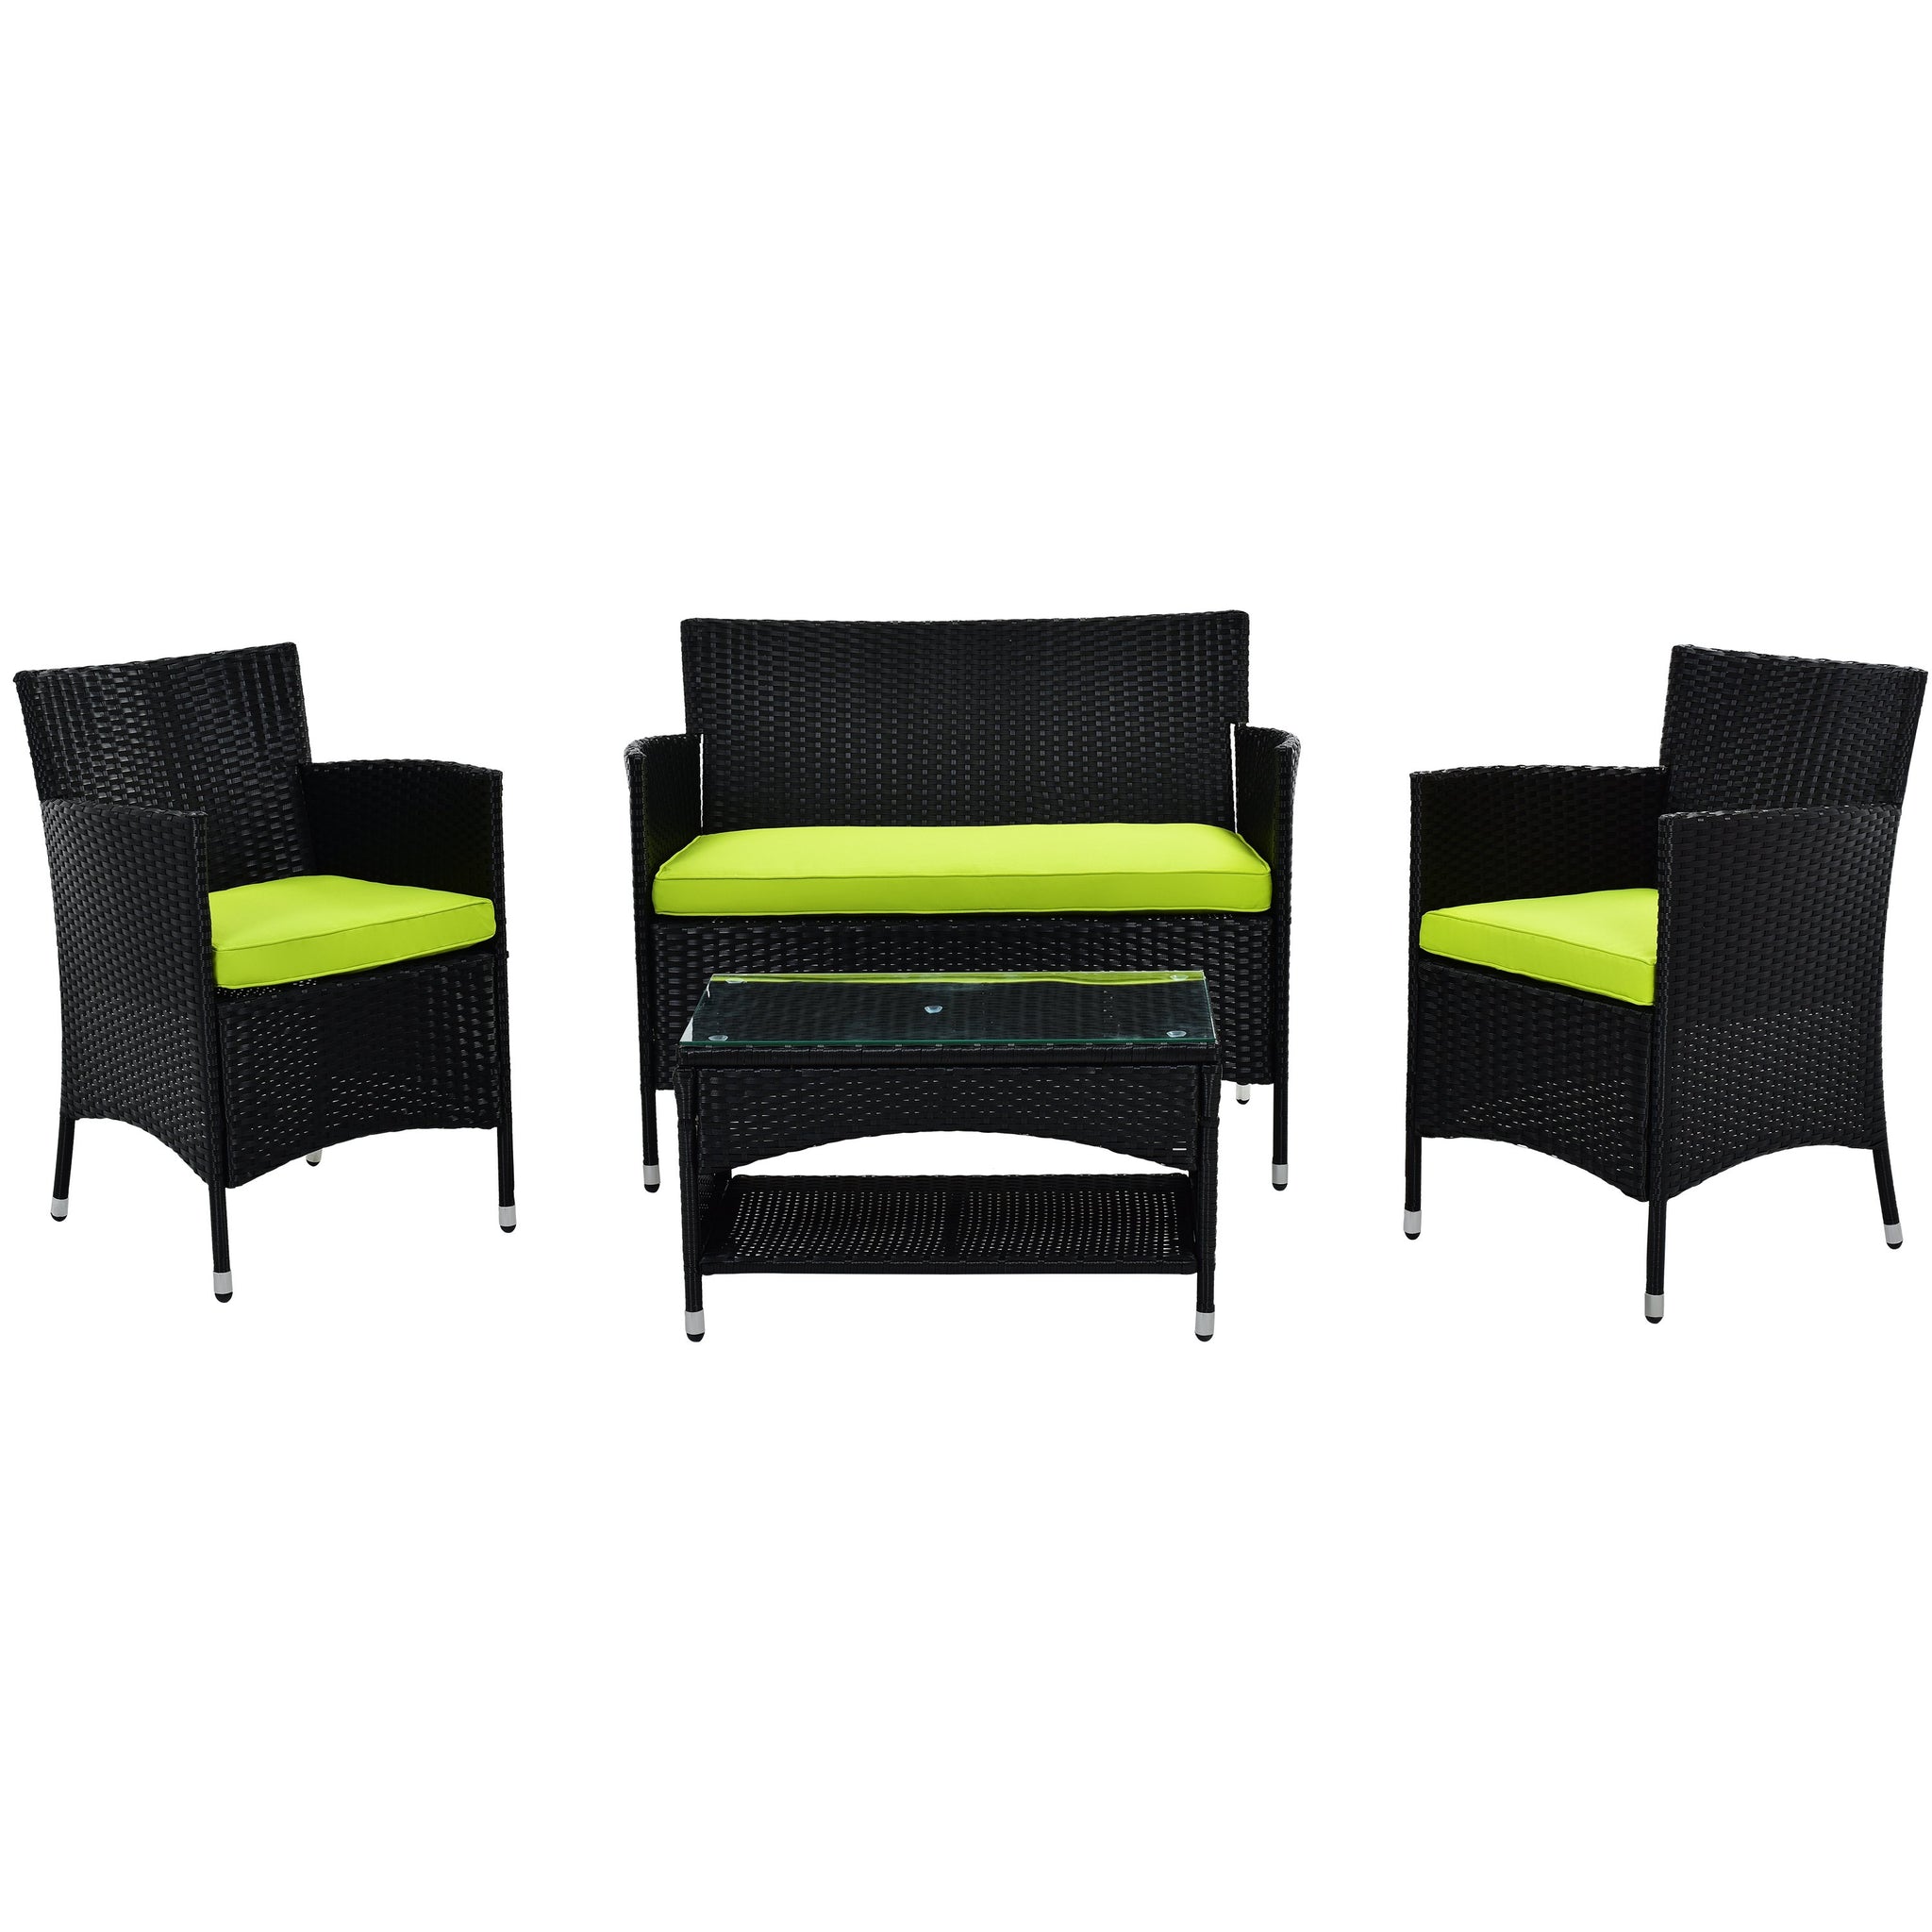 Boyel Living 4-Piece Patio Furniture Outdoor Garden Conversation Wicker Sofa Set, Black Wicker